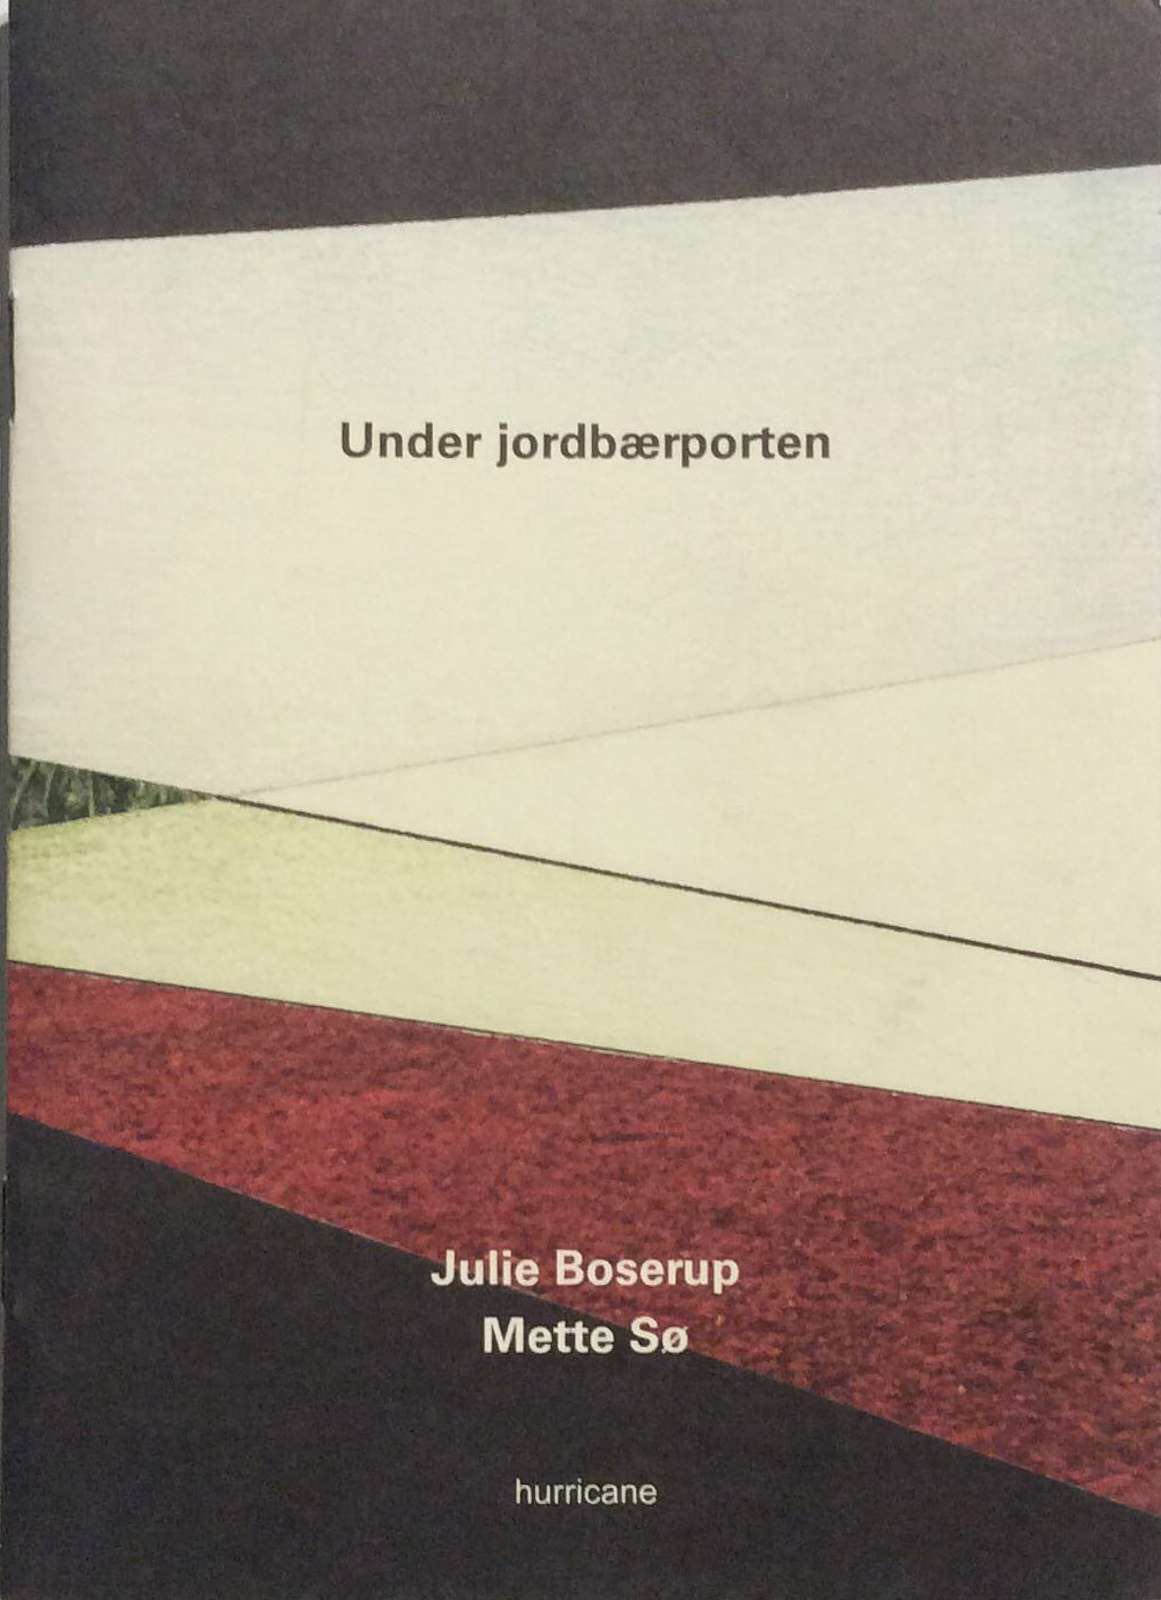 Boserup, Julie & Sø, Mette. Under Jordbærporten